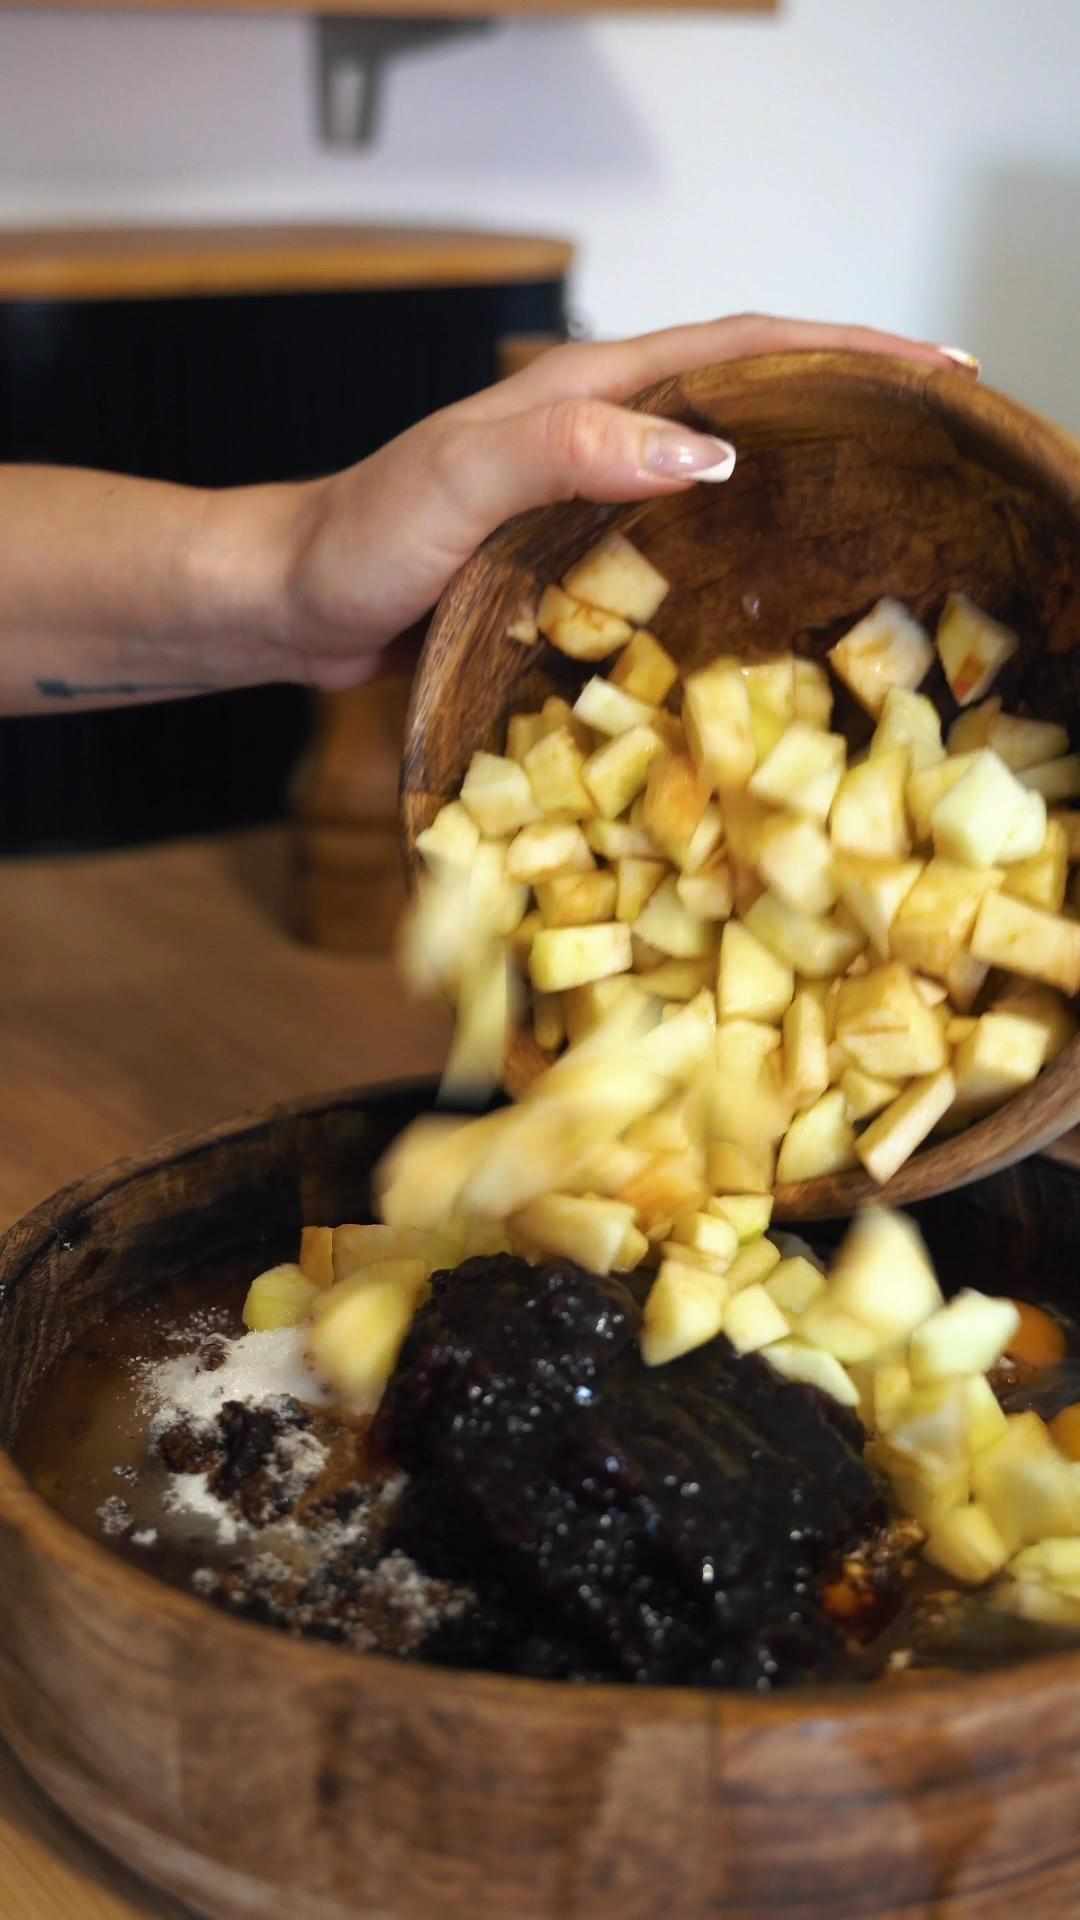 Volimo jesen, volimo brzi kolač od jabuka. Donosimo recept food influencerice!